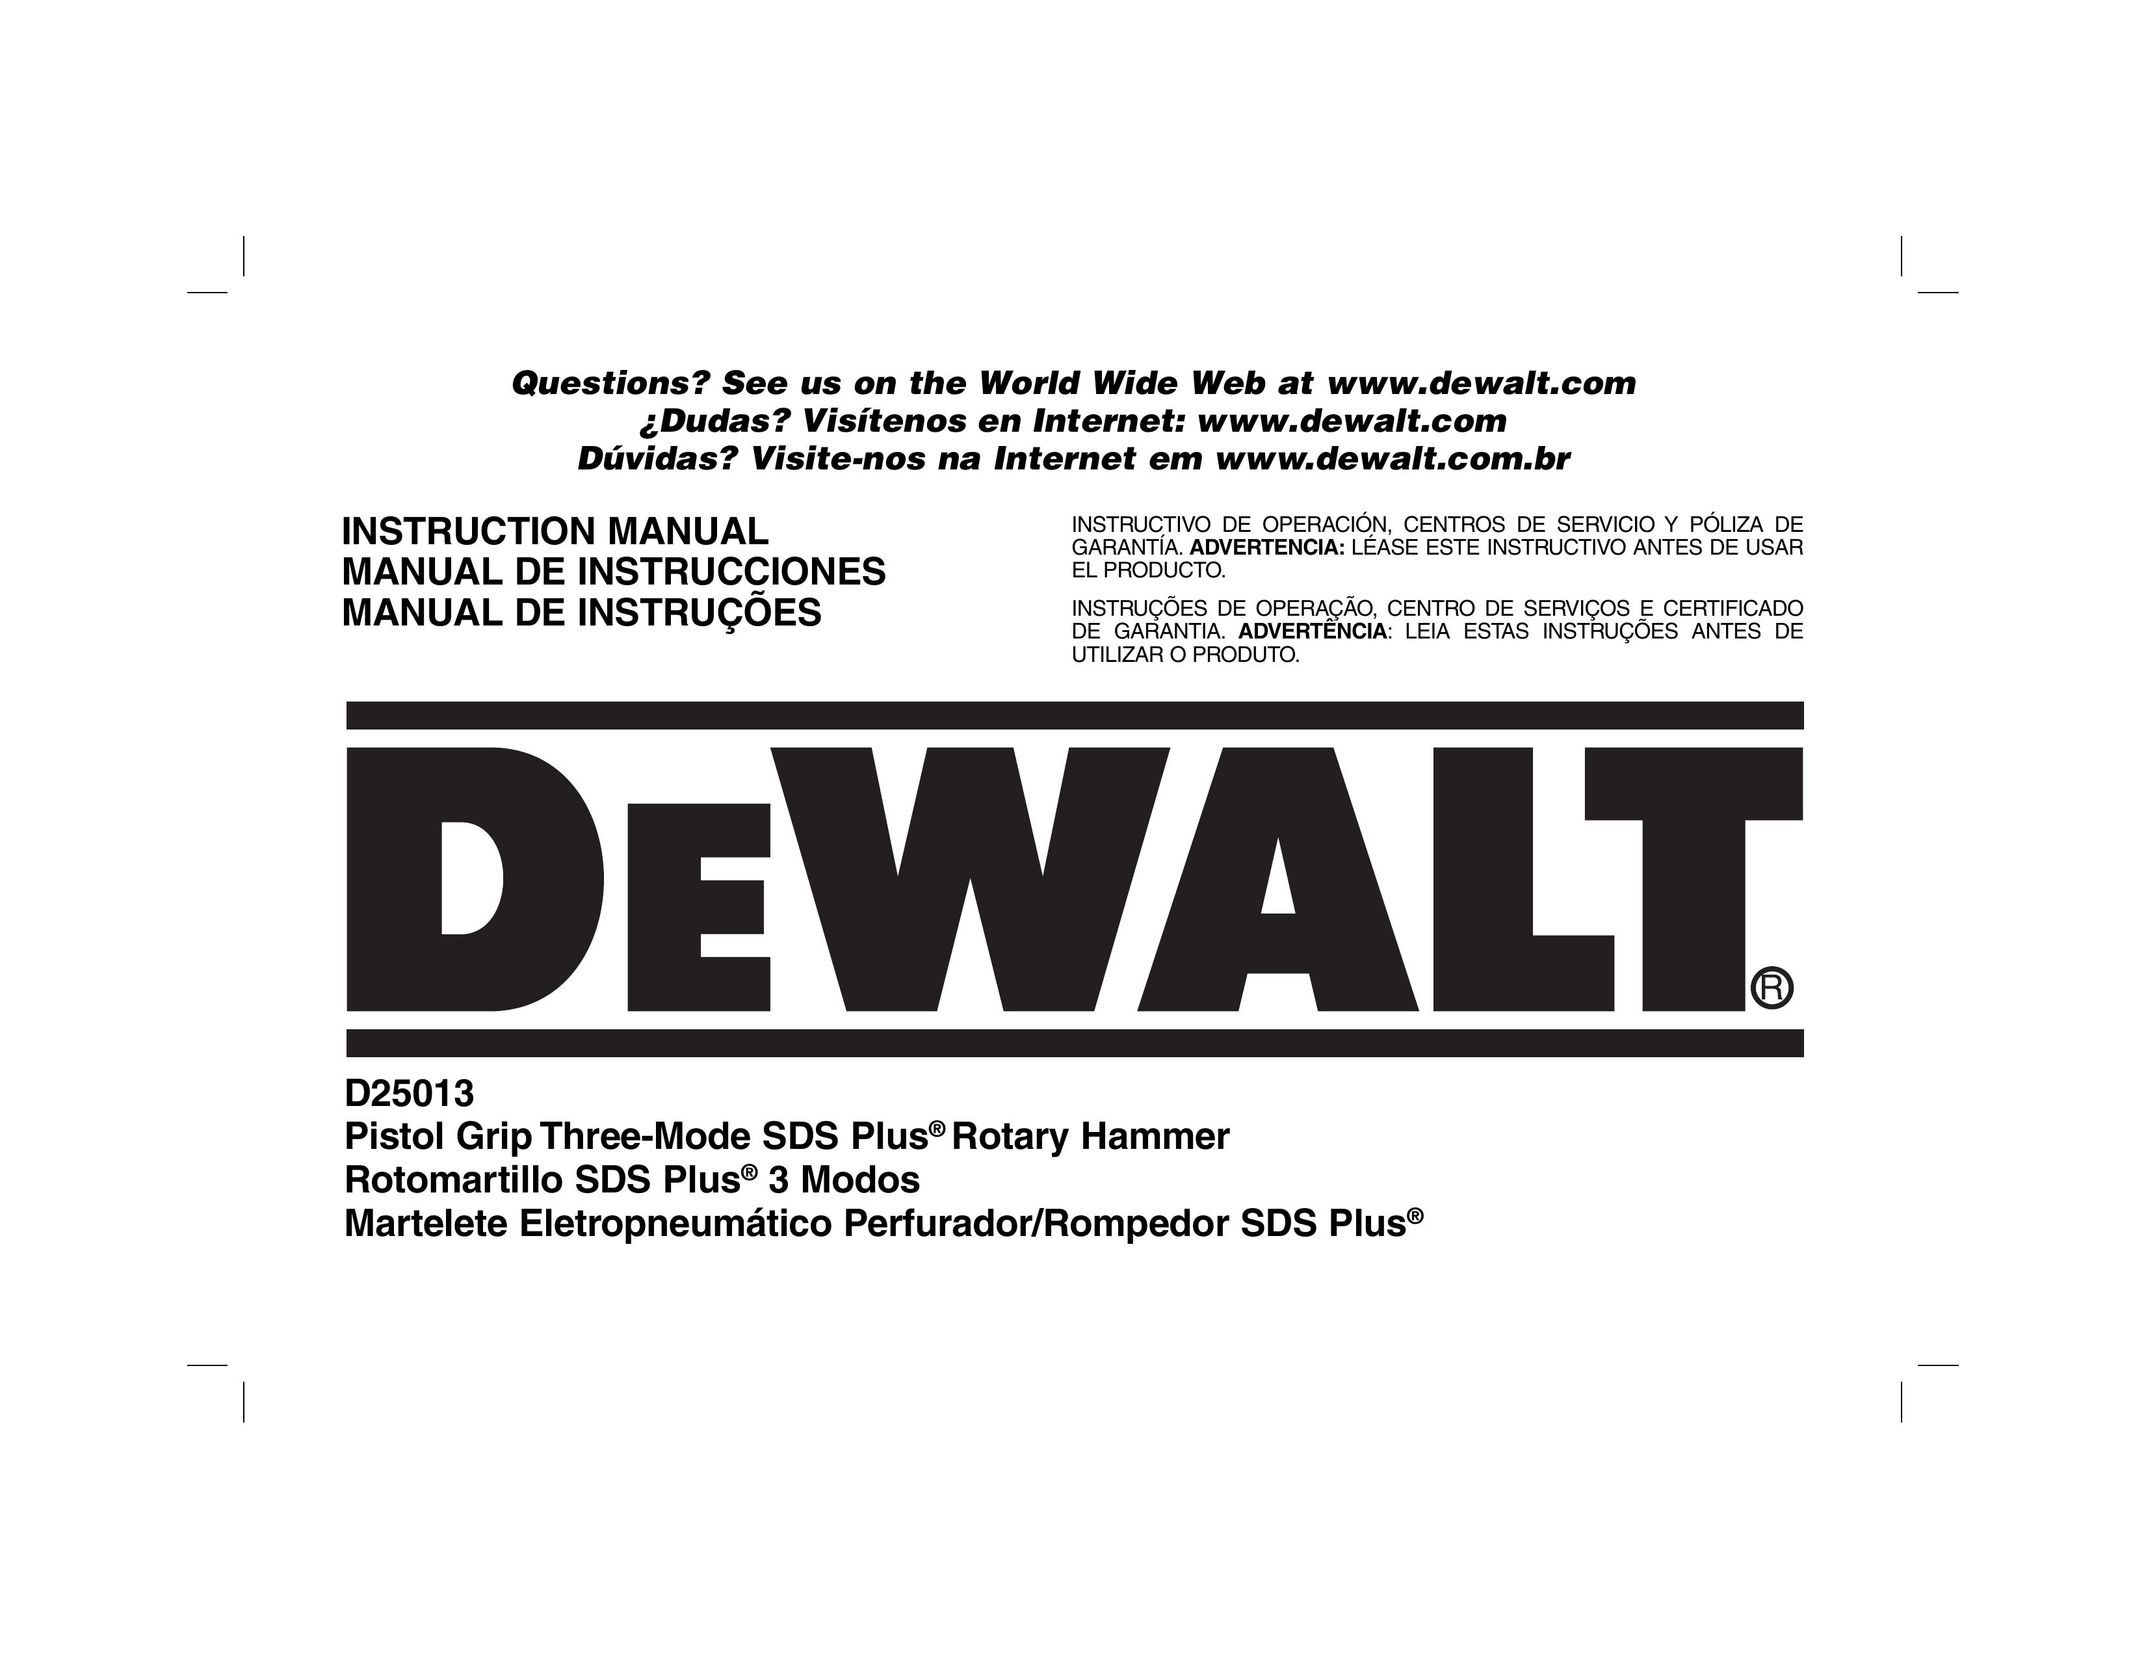 DeWalt D25013 Power Hammer User Manual